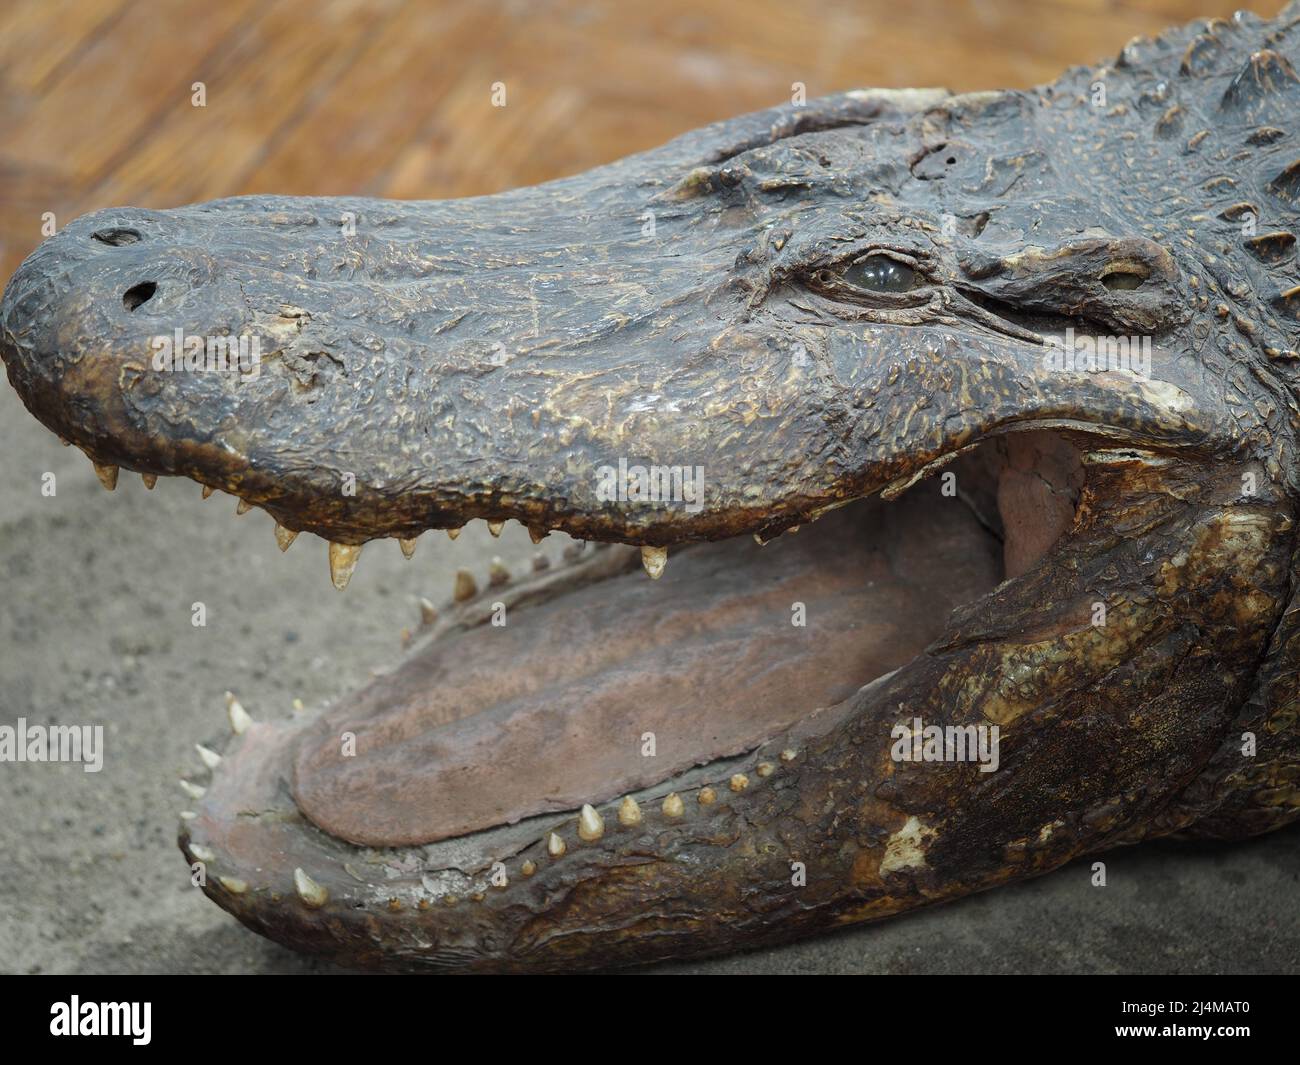 The muzzle of an allgator crocodile, close-up. Stock Photo